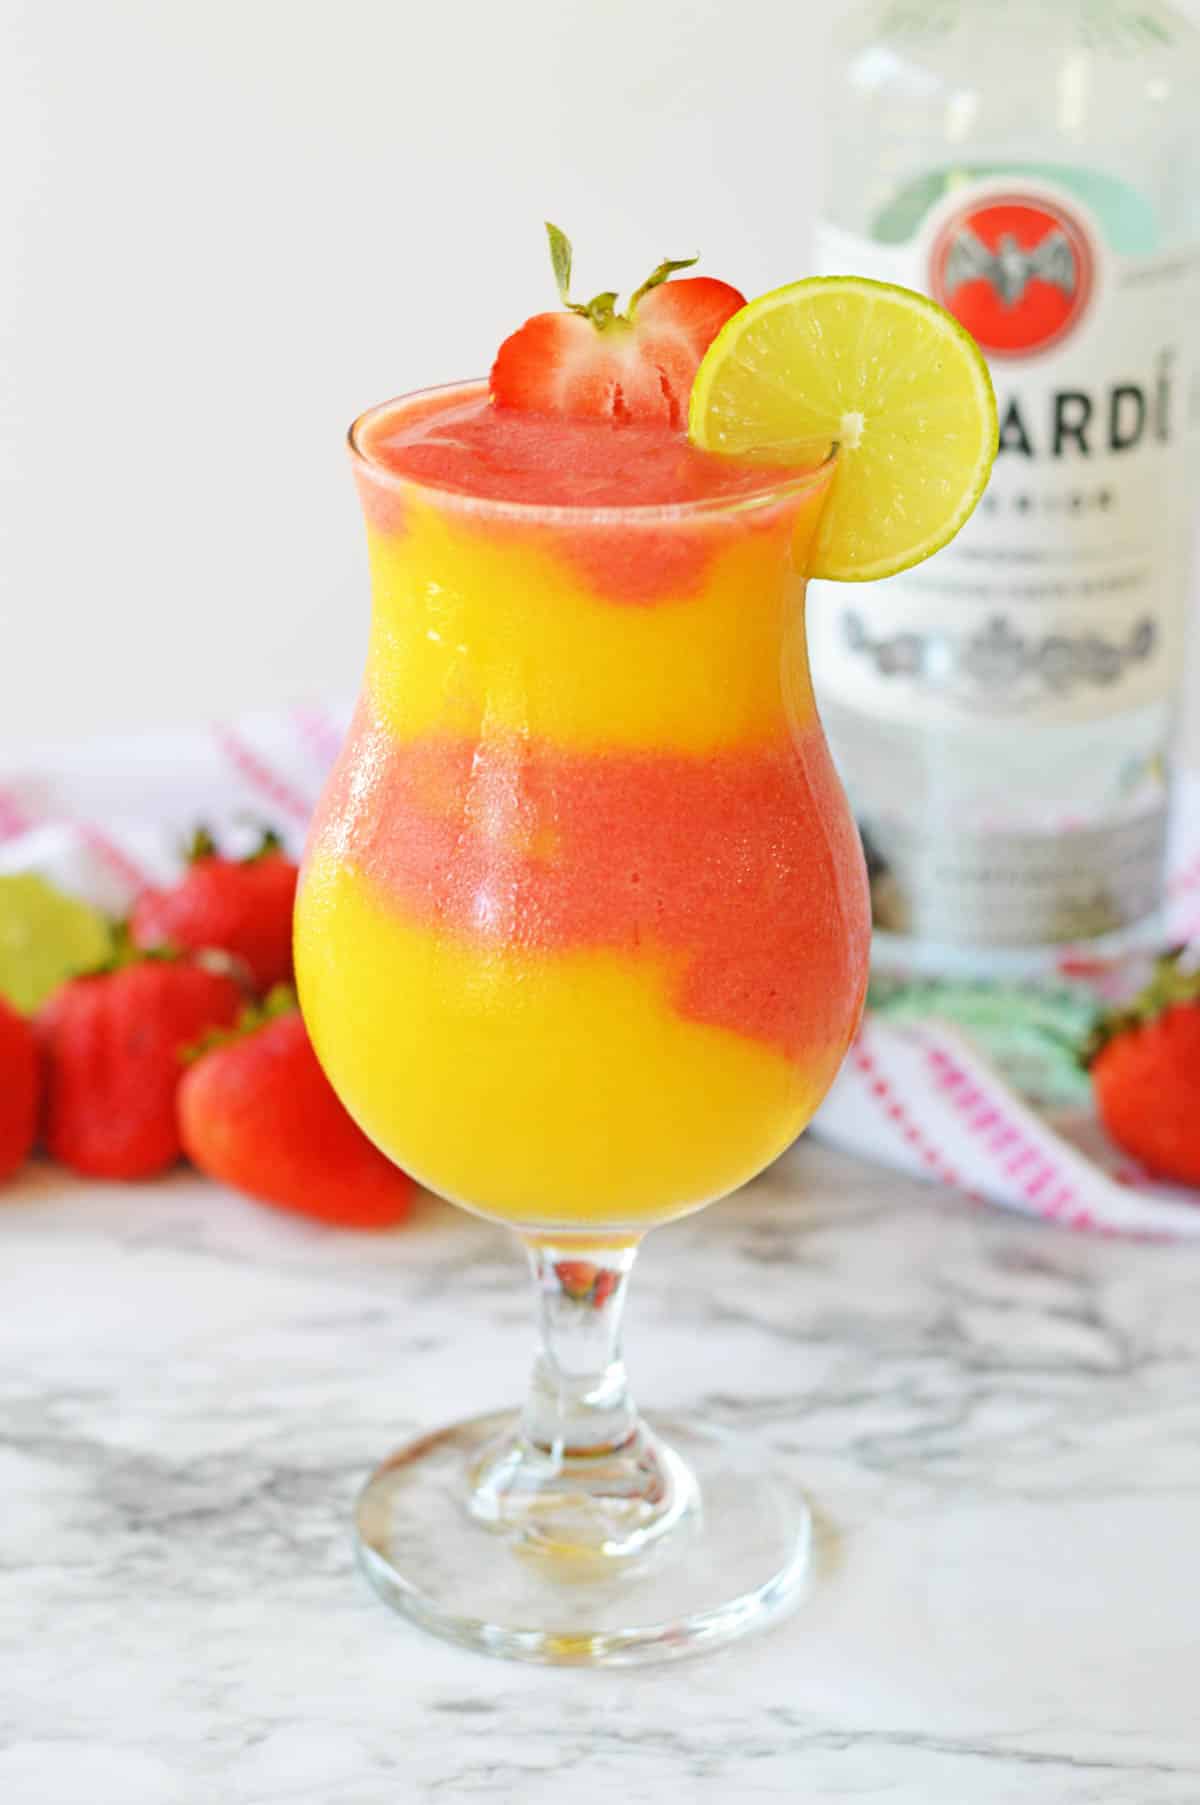 Strawberry and mango frozen daiquiri in a hurricane glass.